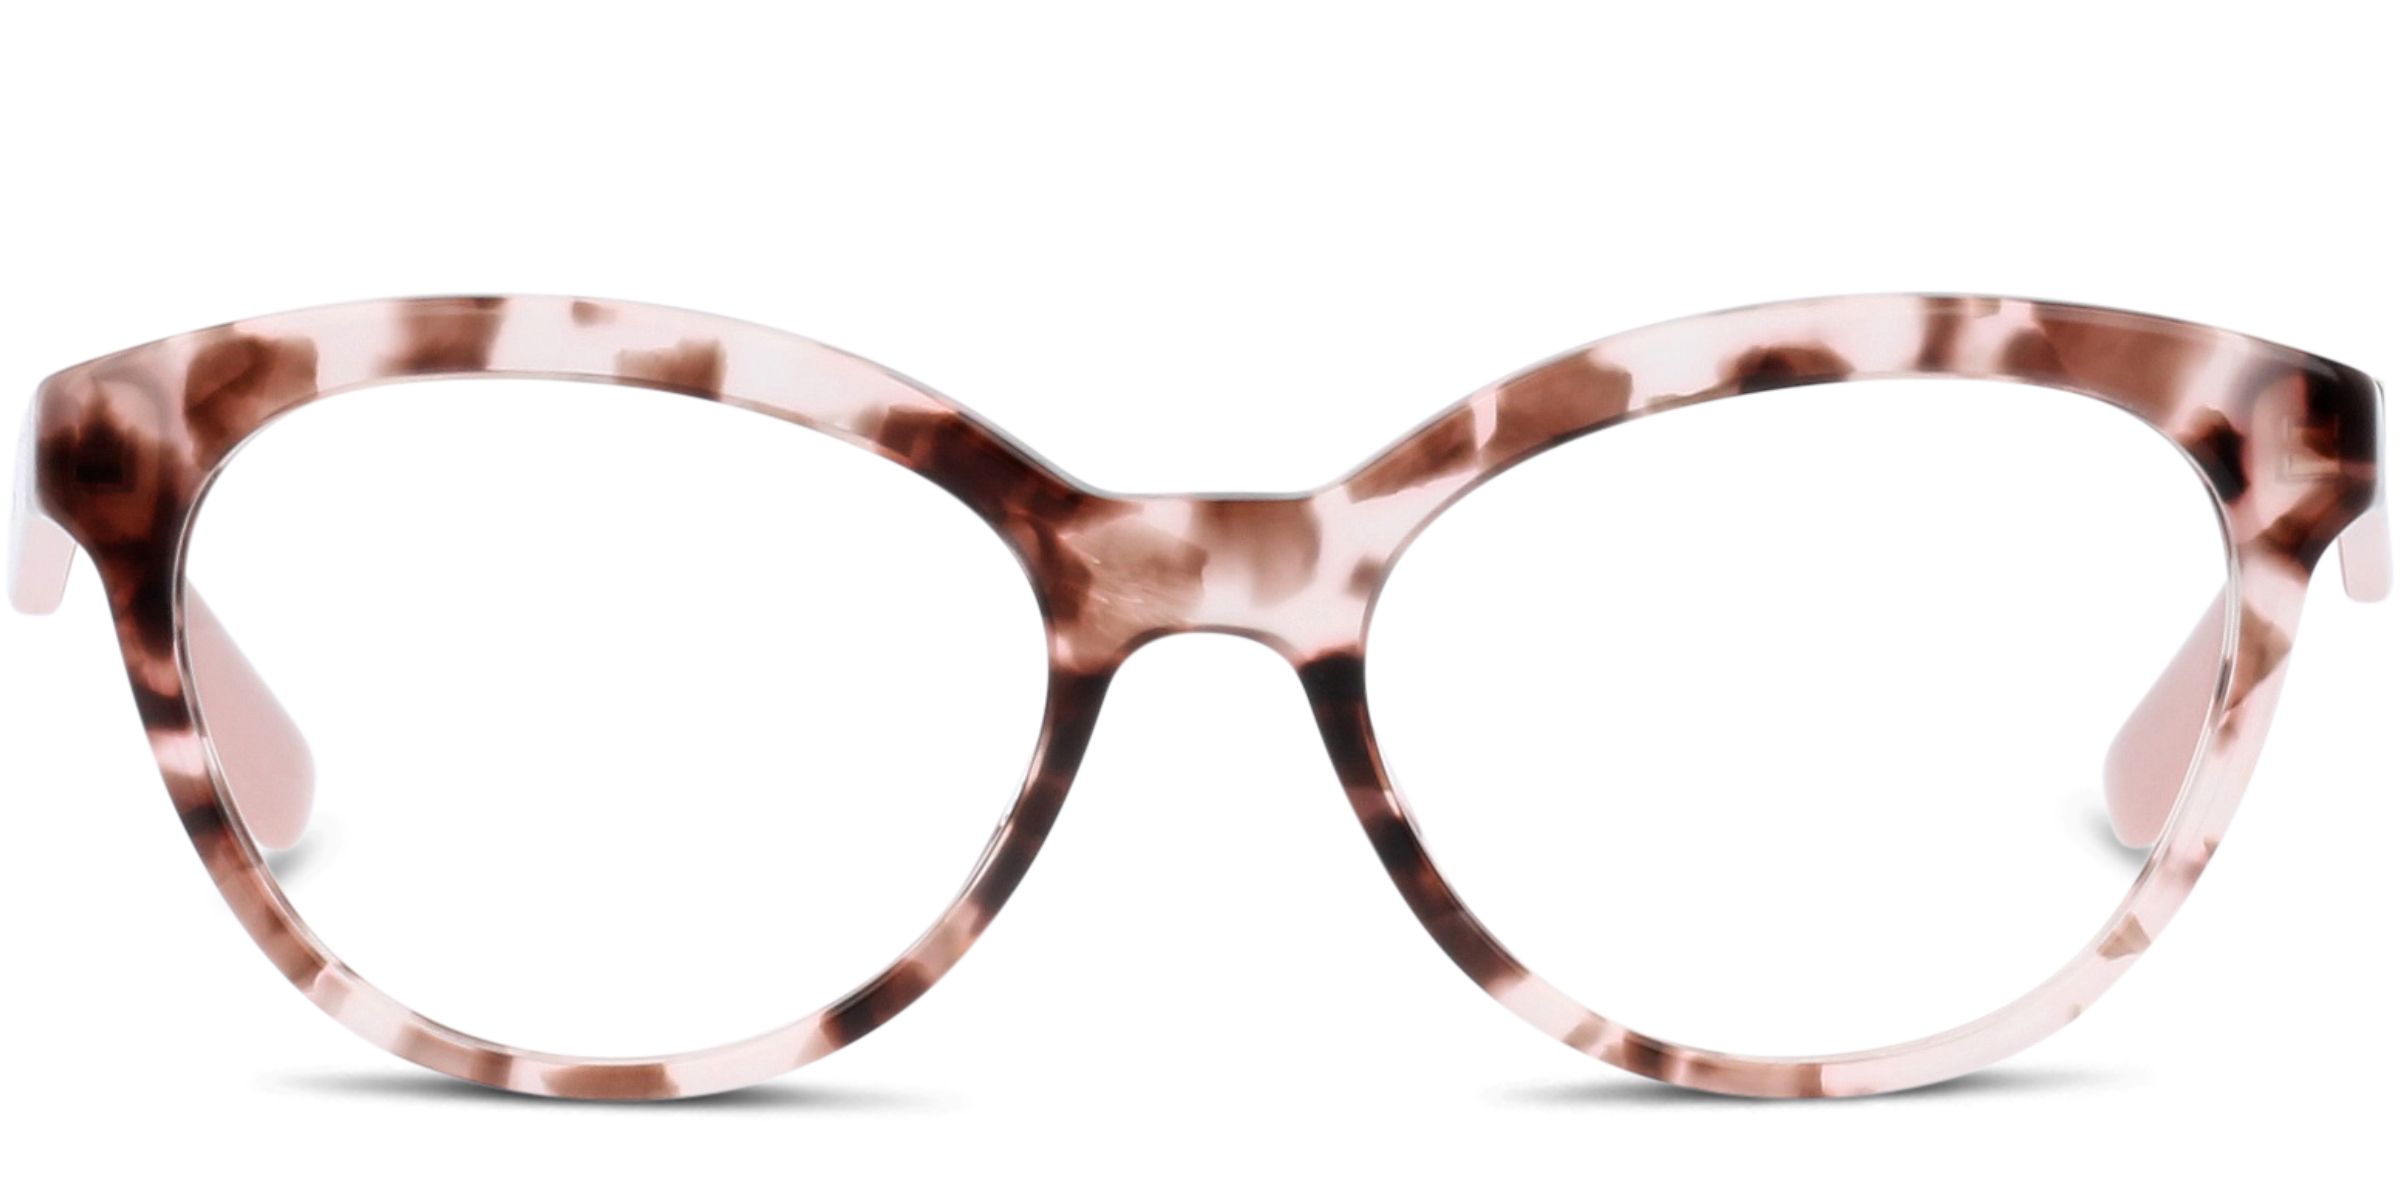 prada pink glasses frame